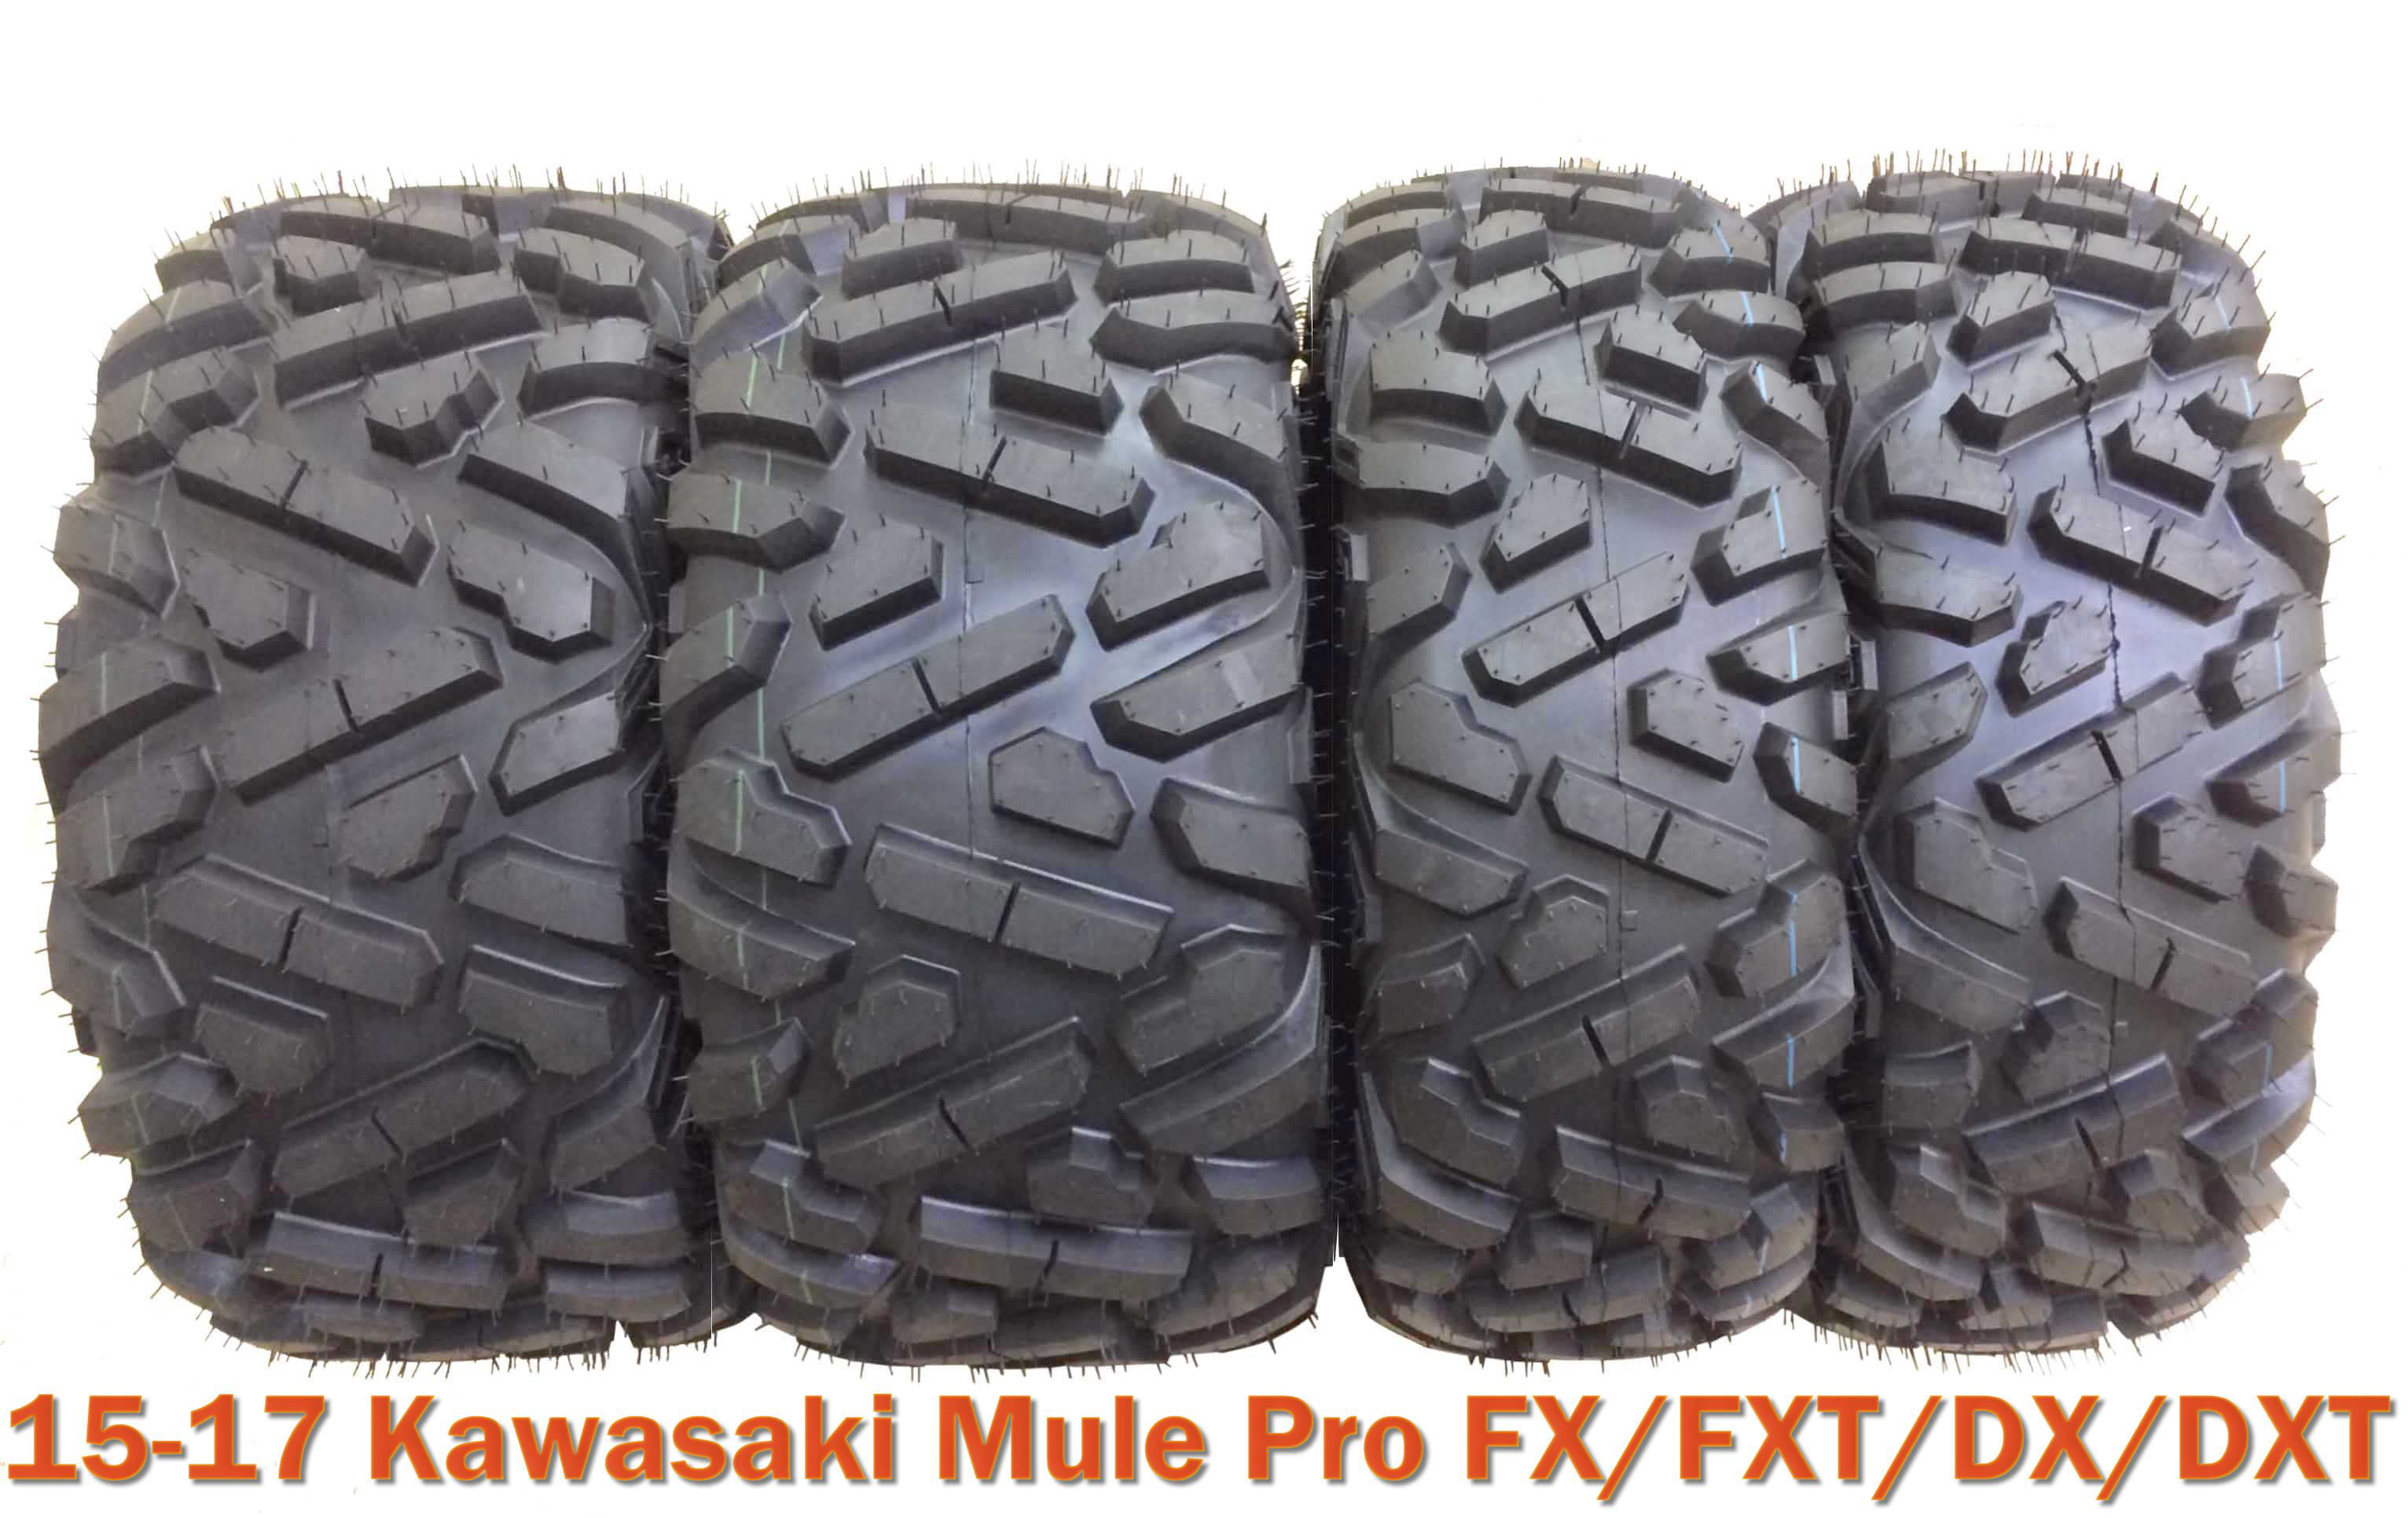 26x9-12 & 26x11-12 Full Set ATV Tires for 15-17 Kawasaki Mule Pro FX/FXT/DX/DXT 